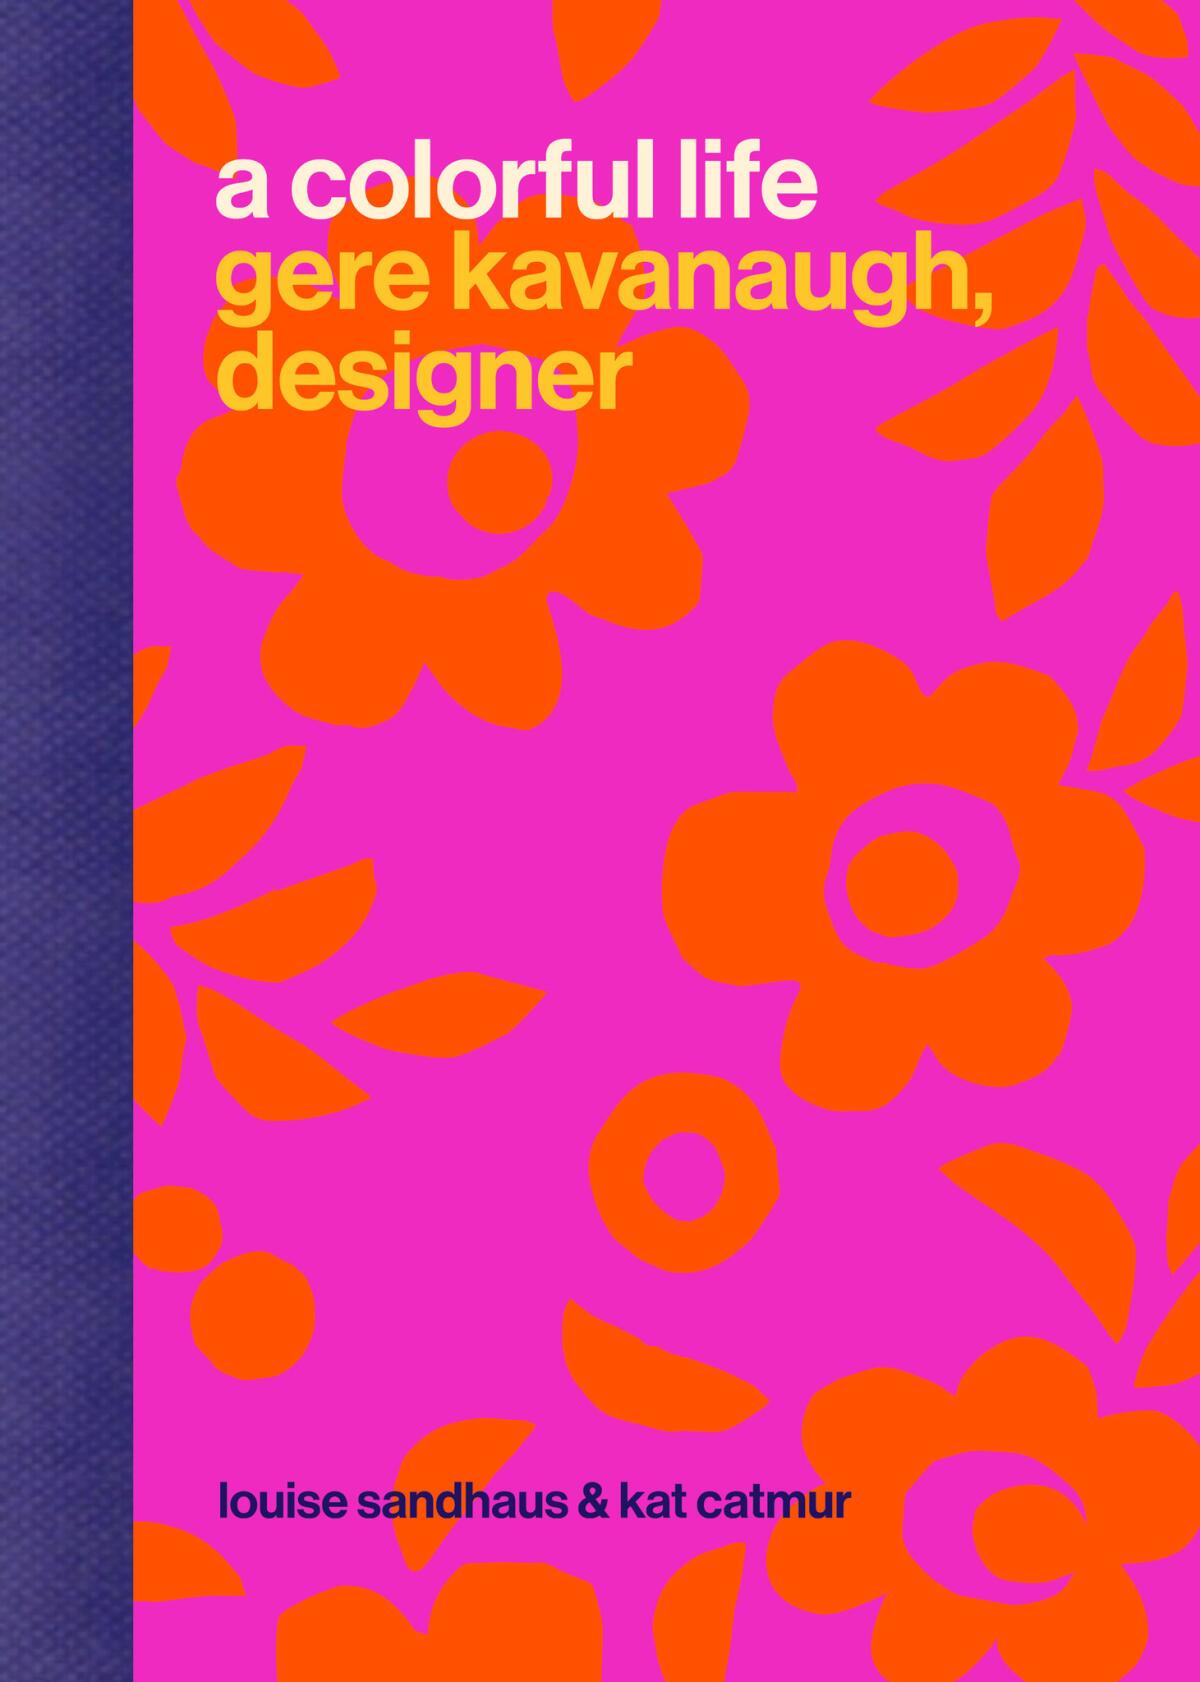 Jacket of "A Colorful Life: Gere Kavanaugh, Designer" by Louise Sandhaus & Kat Catmur.